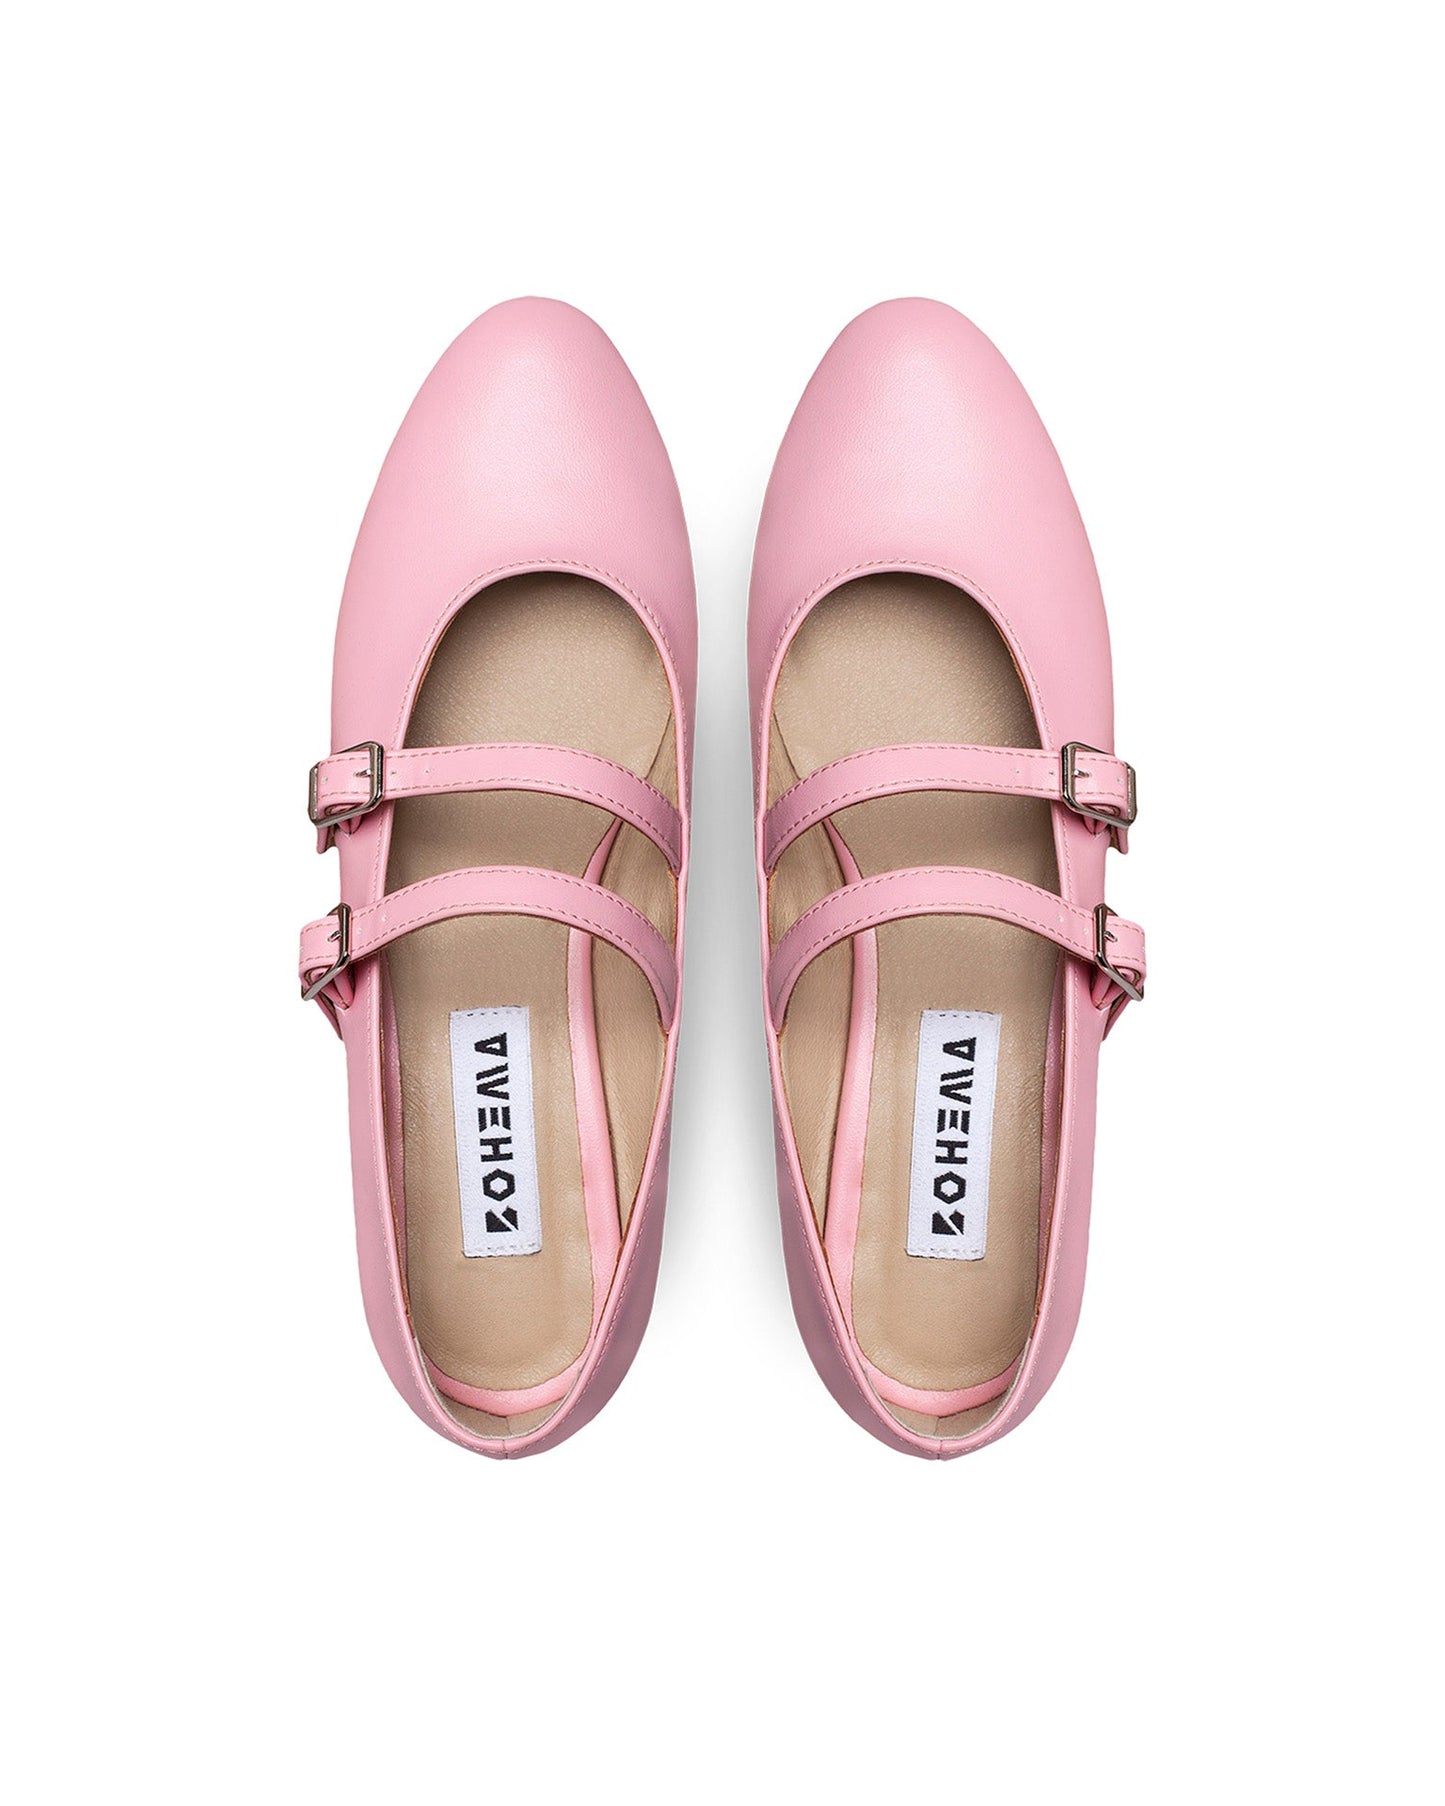 Mary Jane Pumps No. 2 Pink ballerinas made of Vegea grape leather - sample sale